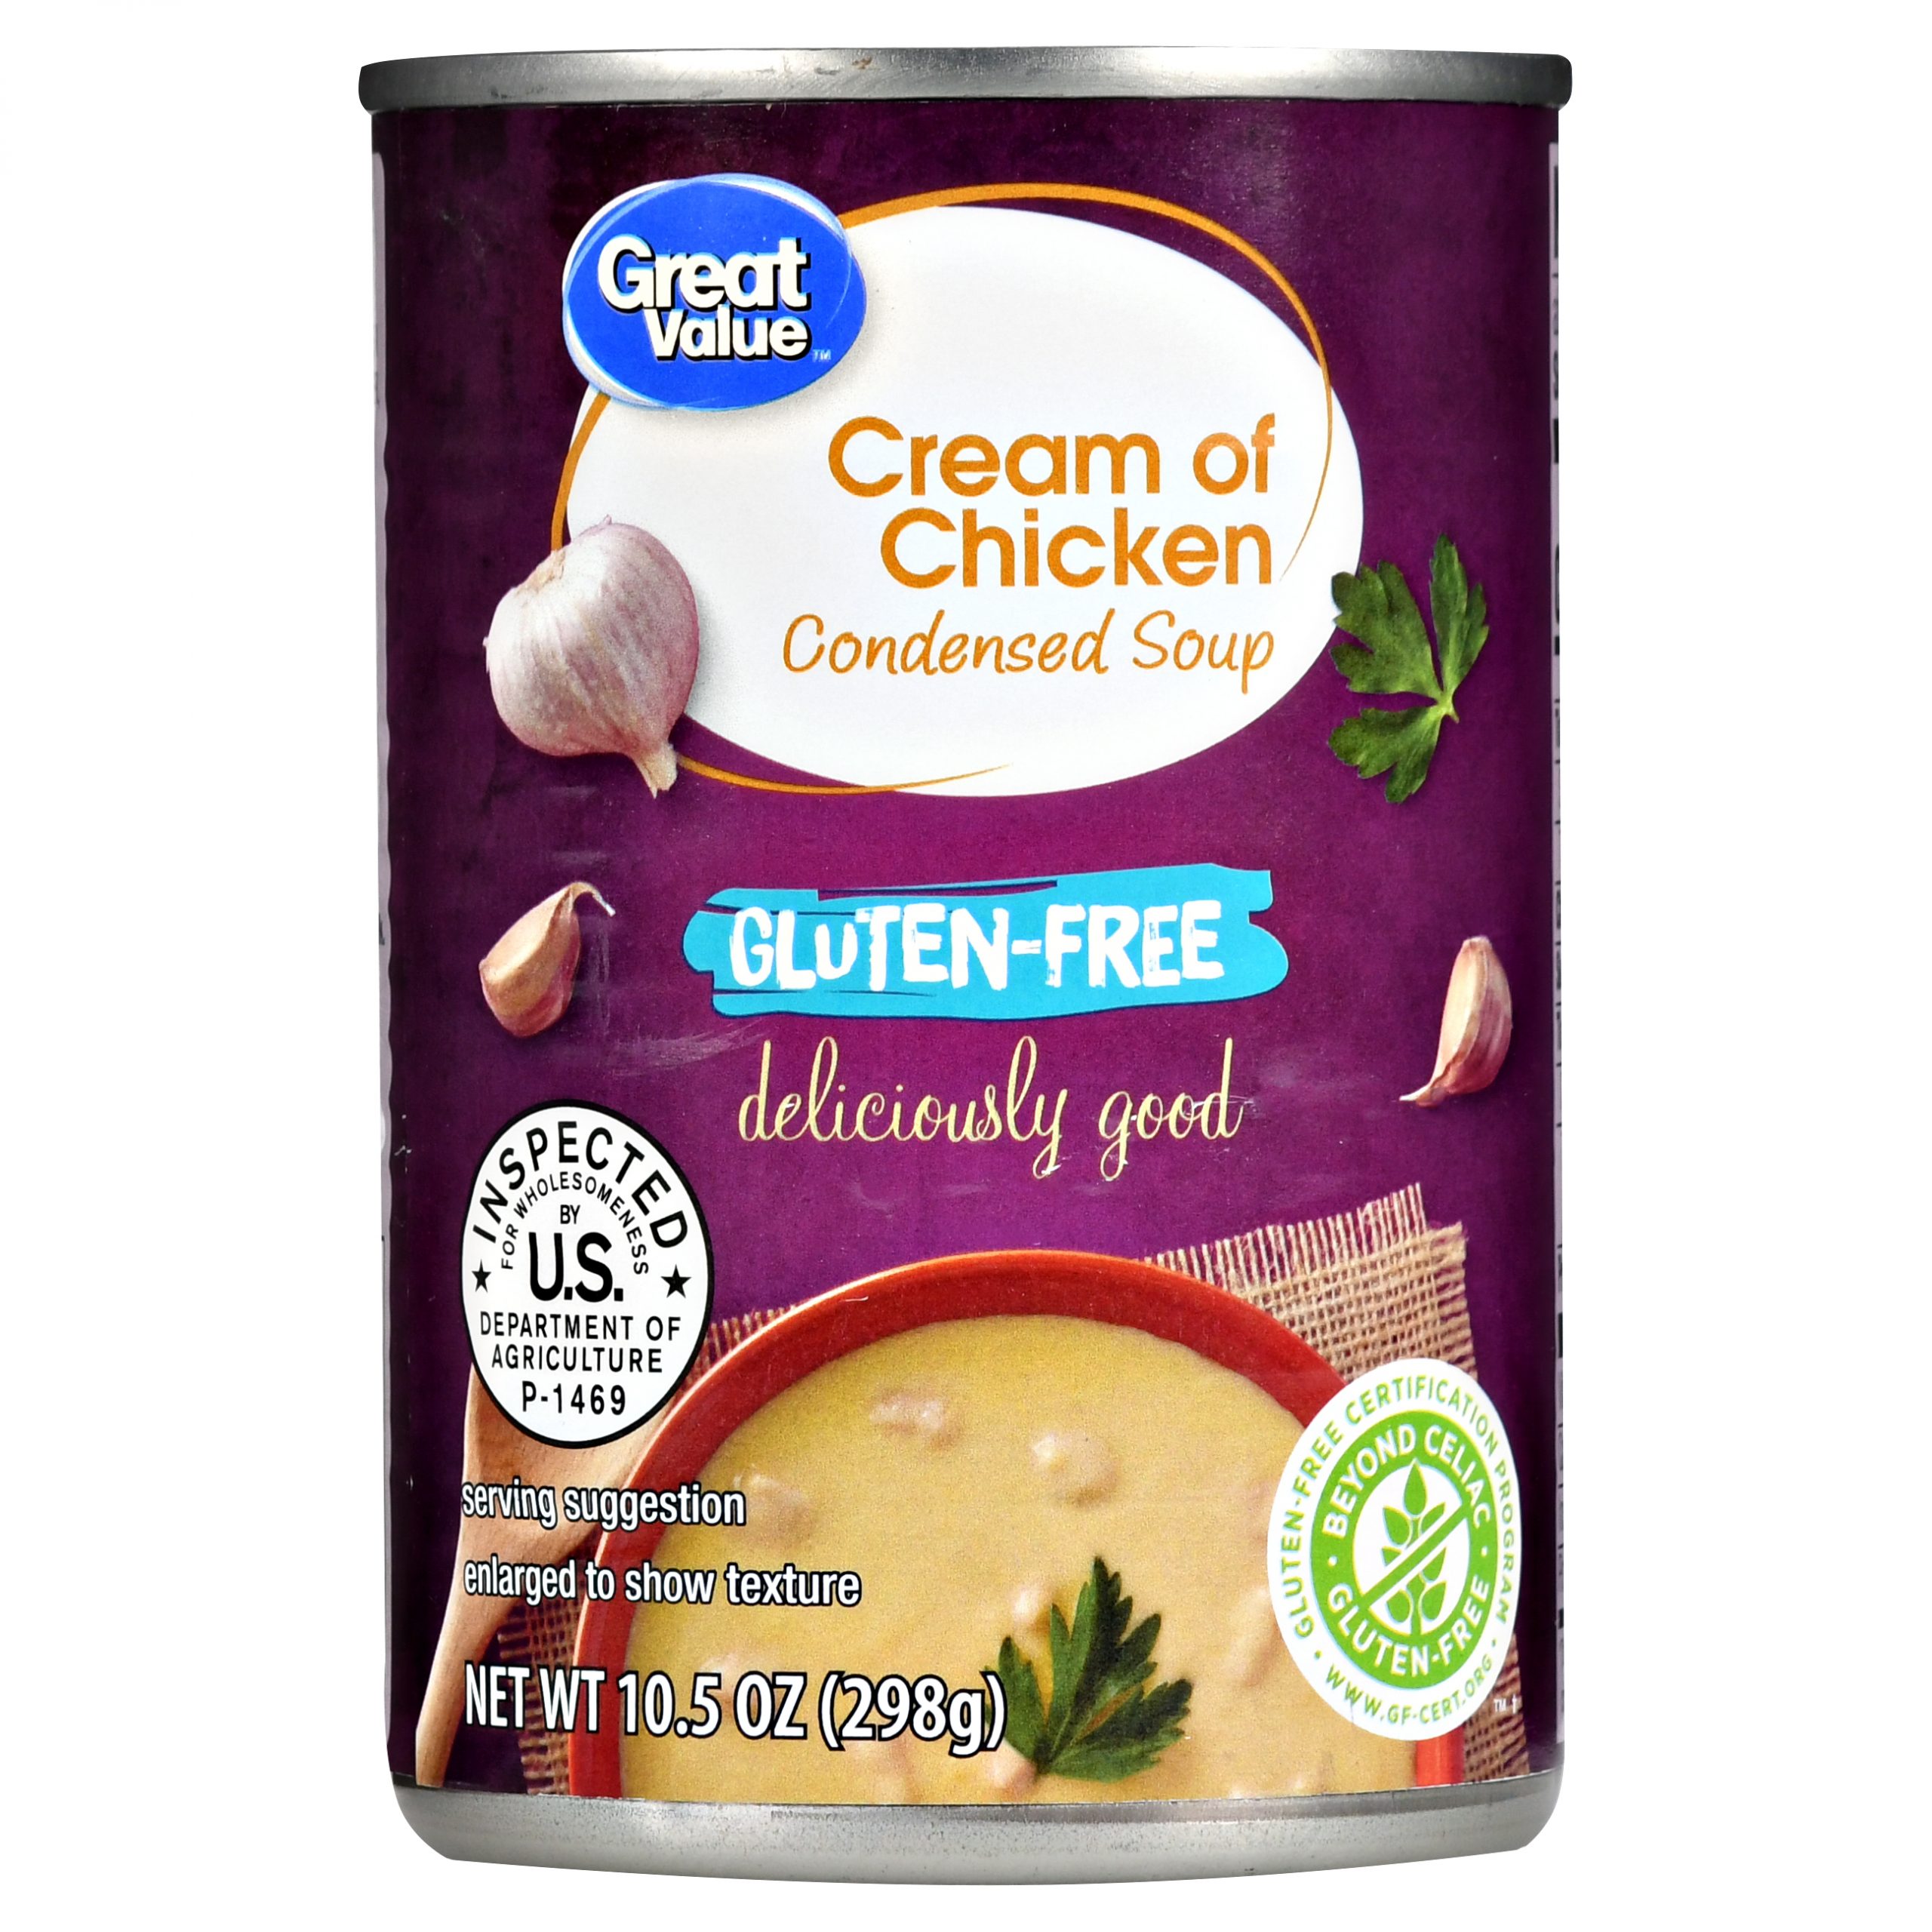 Great Value Gluten Free Cream of Chicken Condensed Soup ...